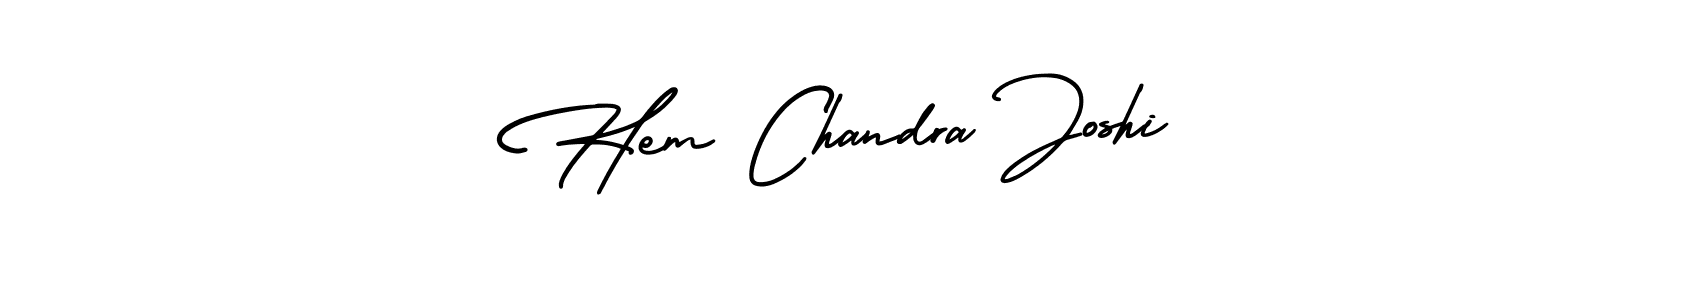 Make a beautiful signature design for name Hem Chandra Joshi. Use this online signature maker to create a handwritten signature for free. Hem Chandra Joshi signature style 3 images and pictures png